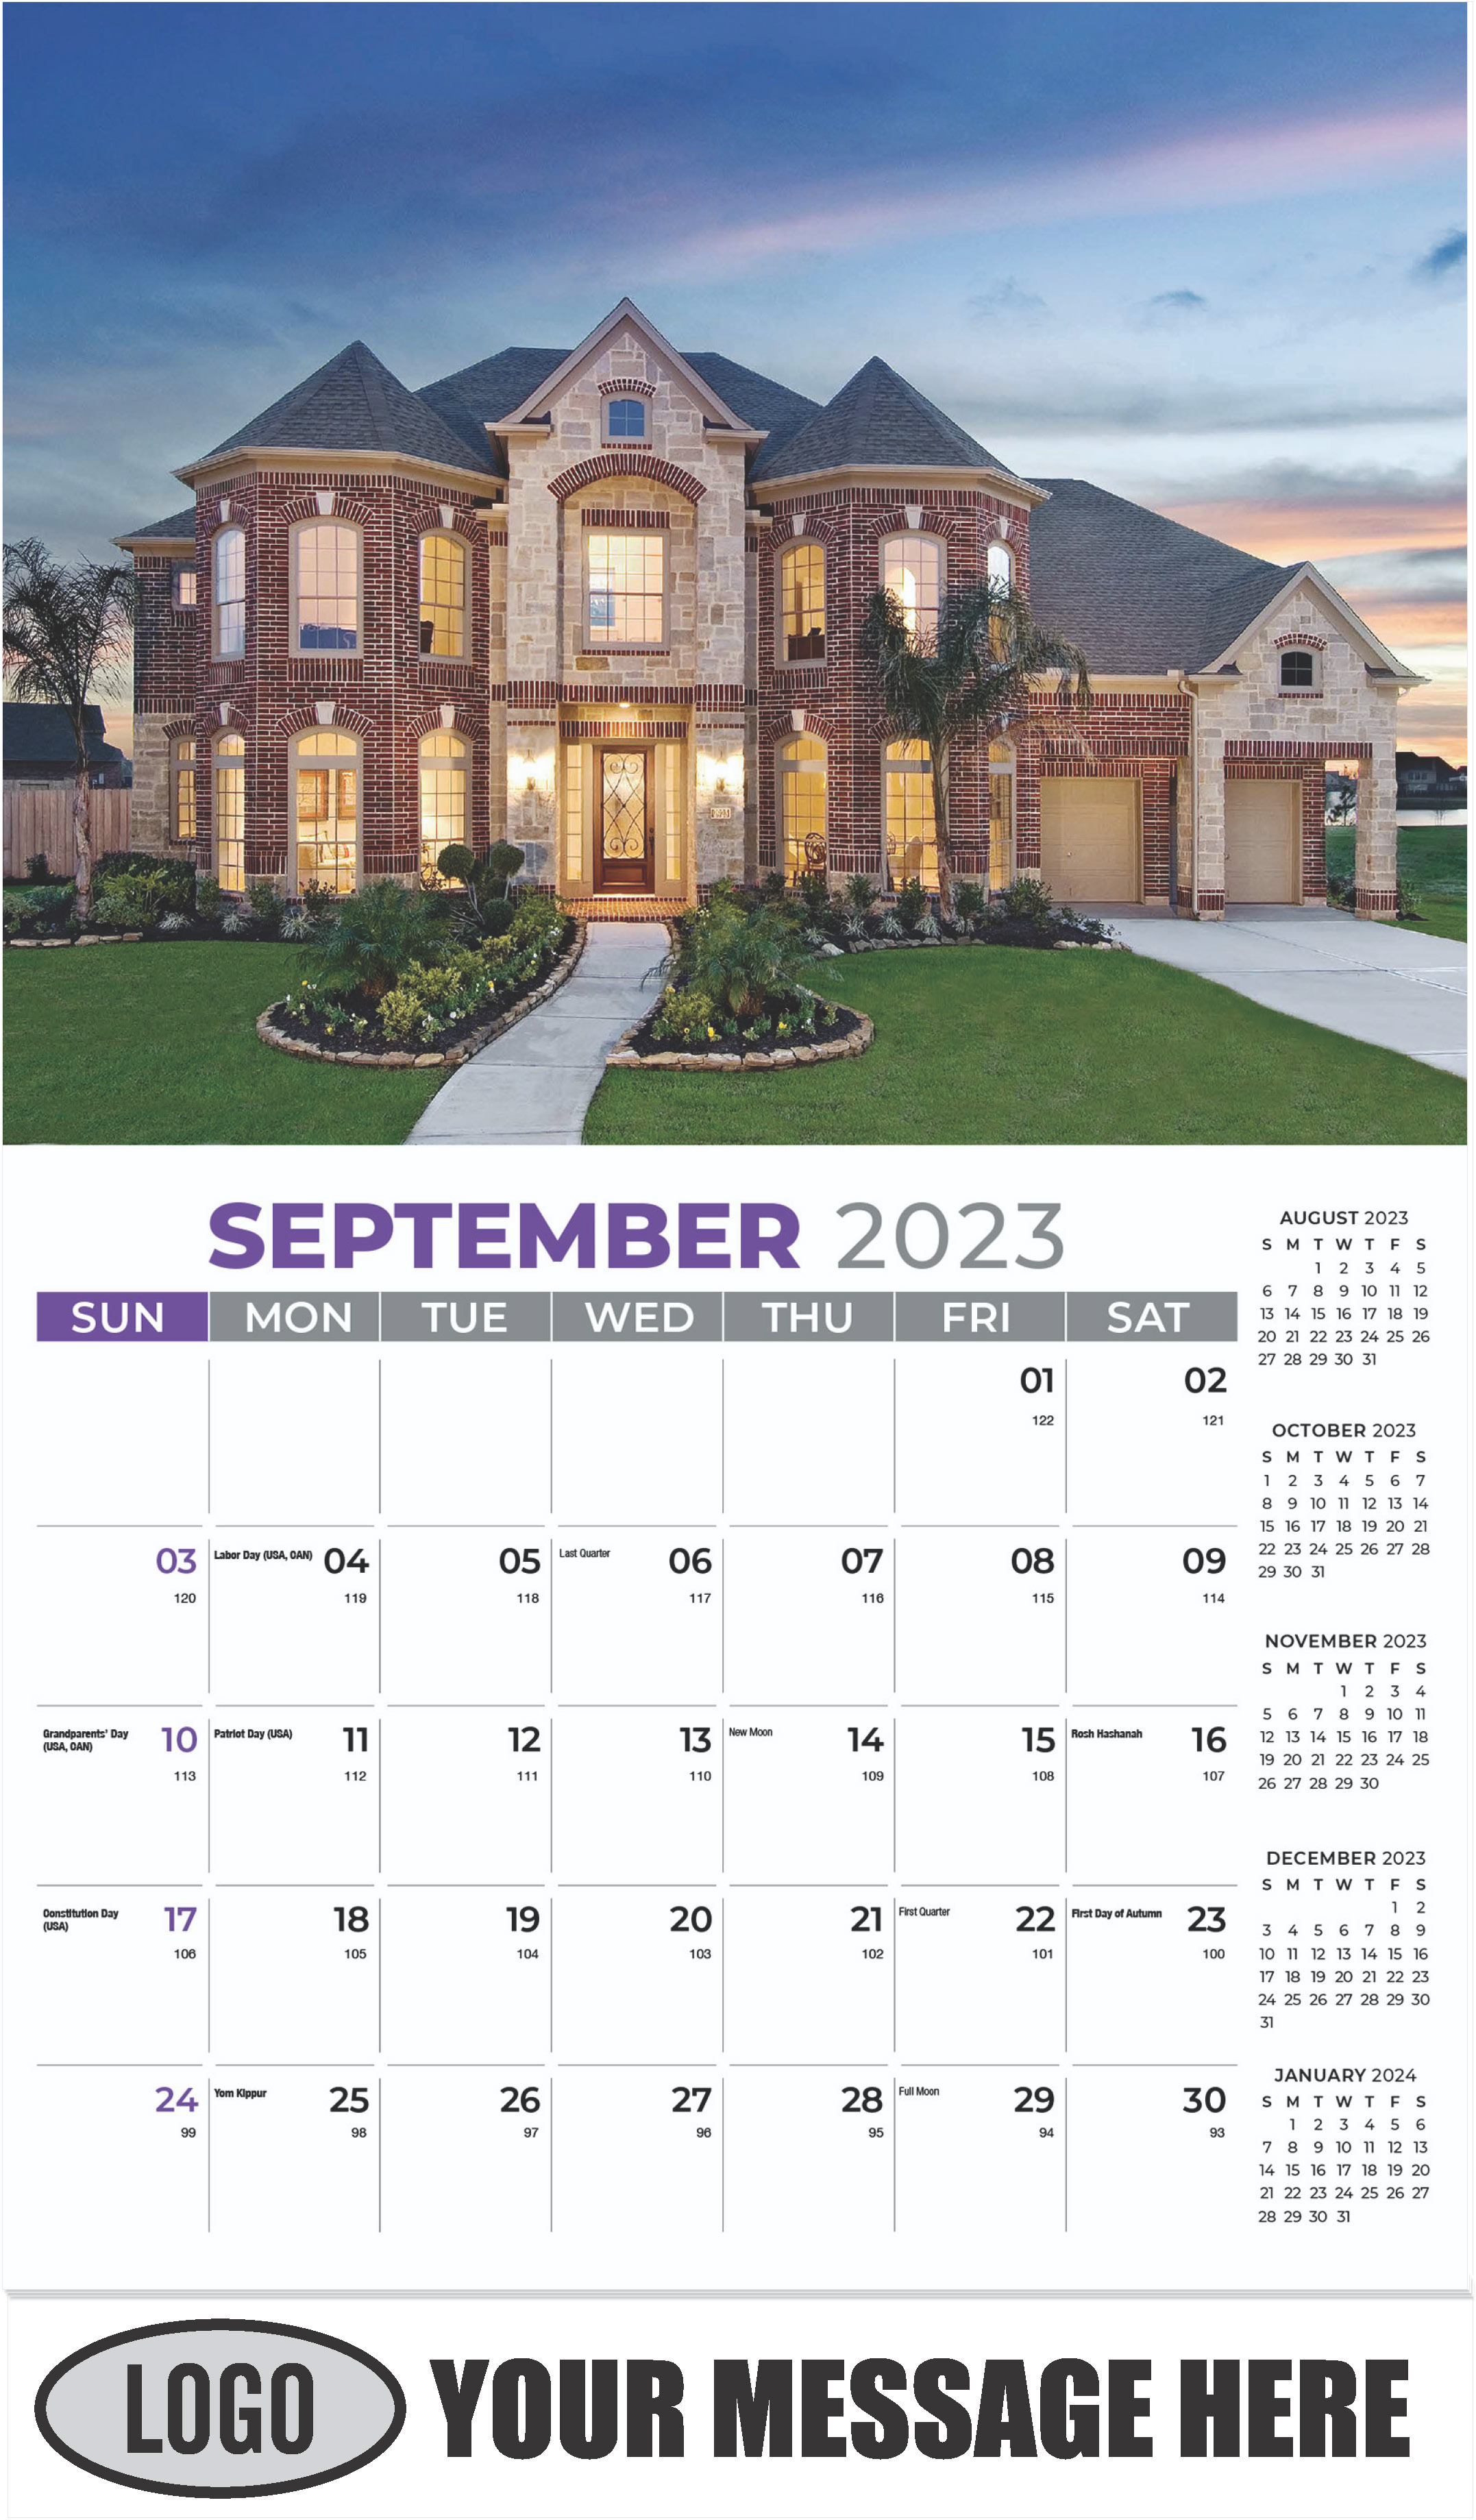 Luxury Homes Calendar - September - Homes 2023 Promotional Calendar